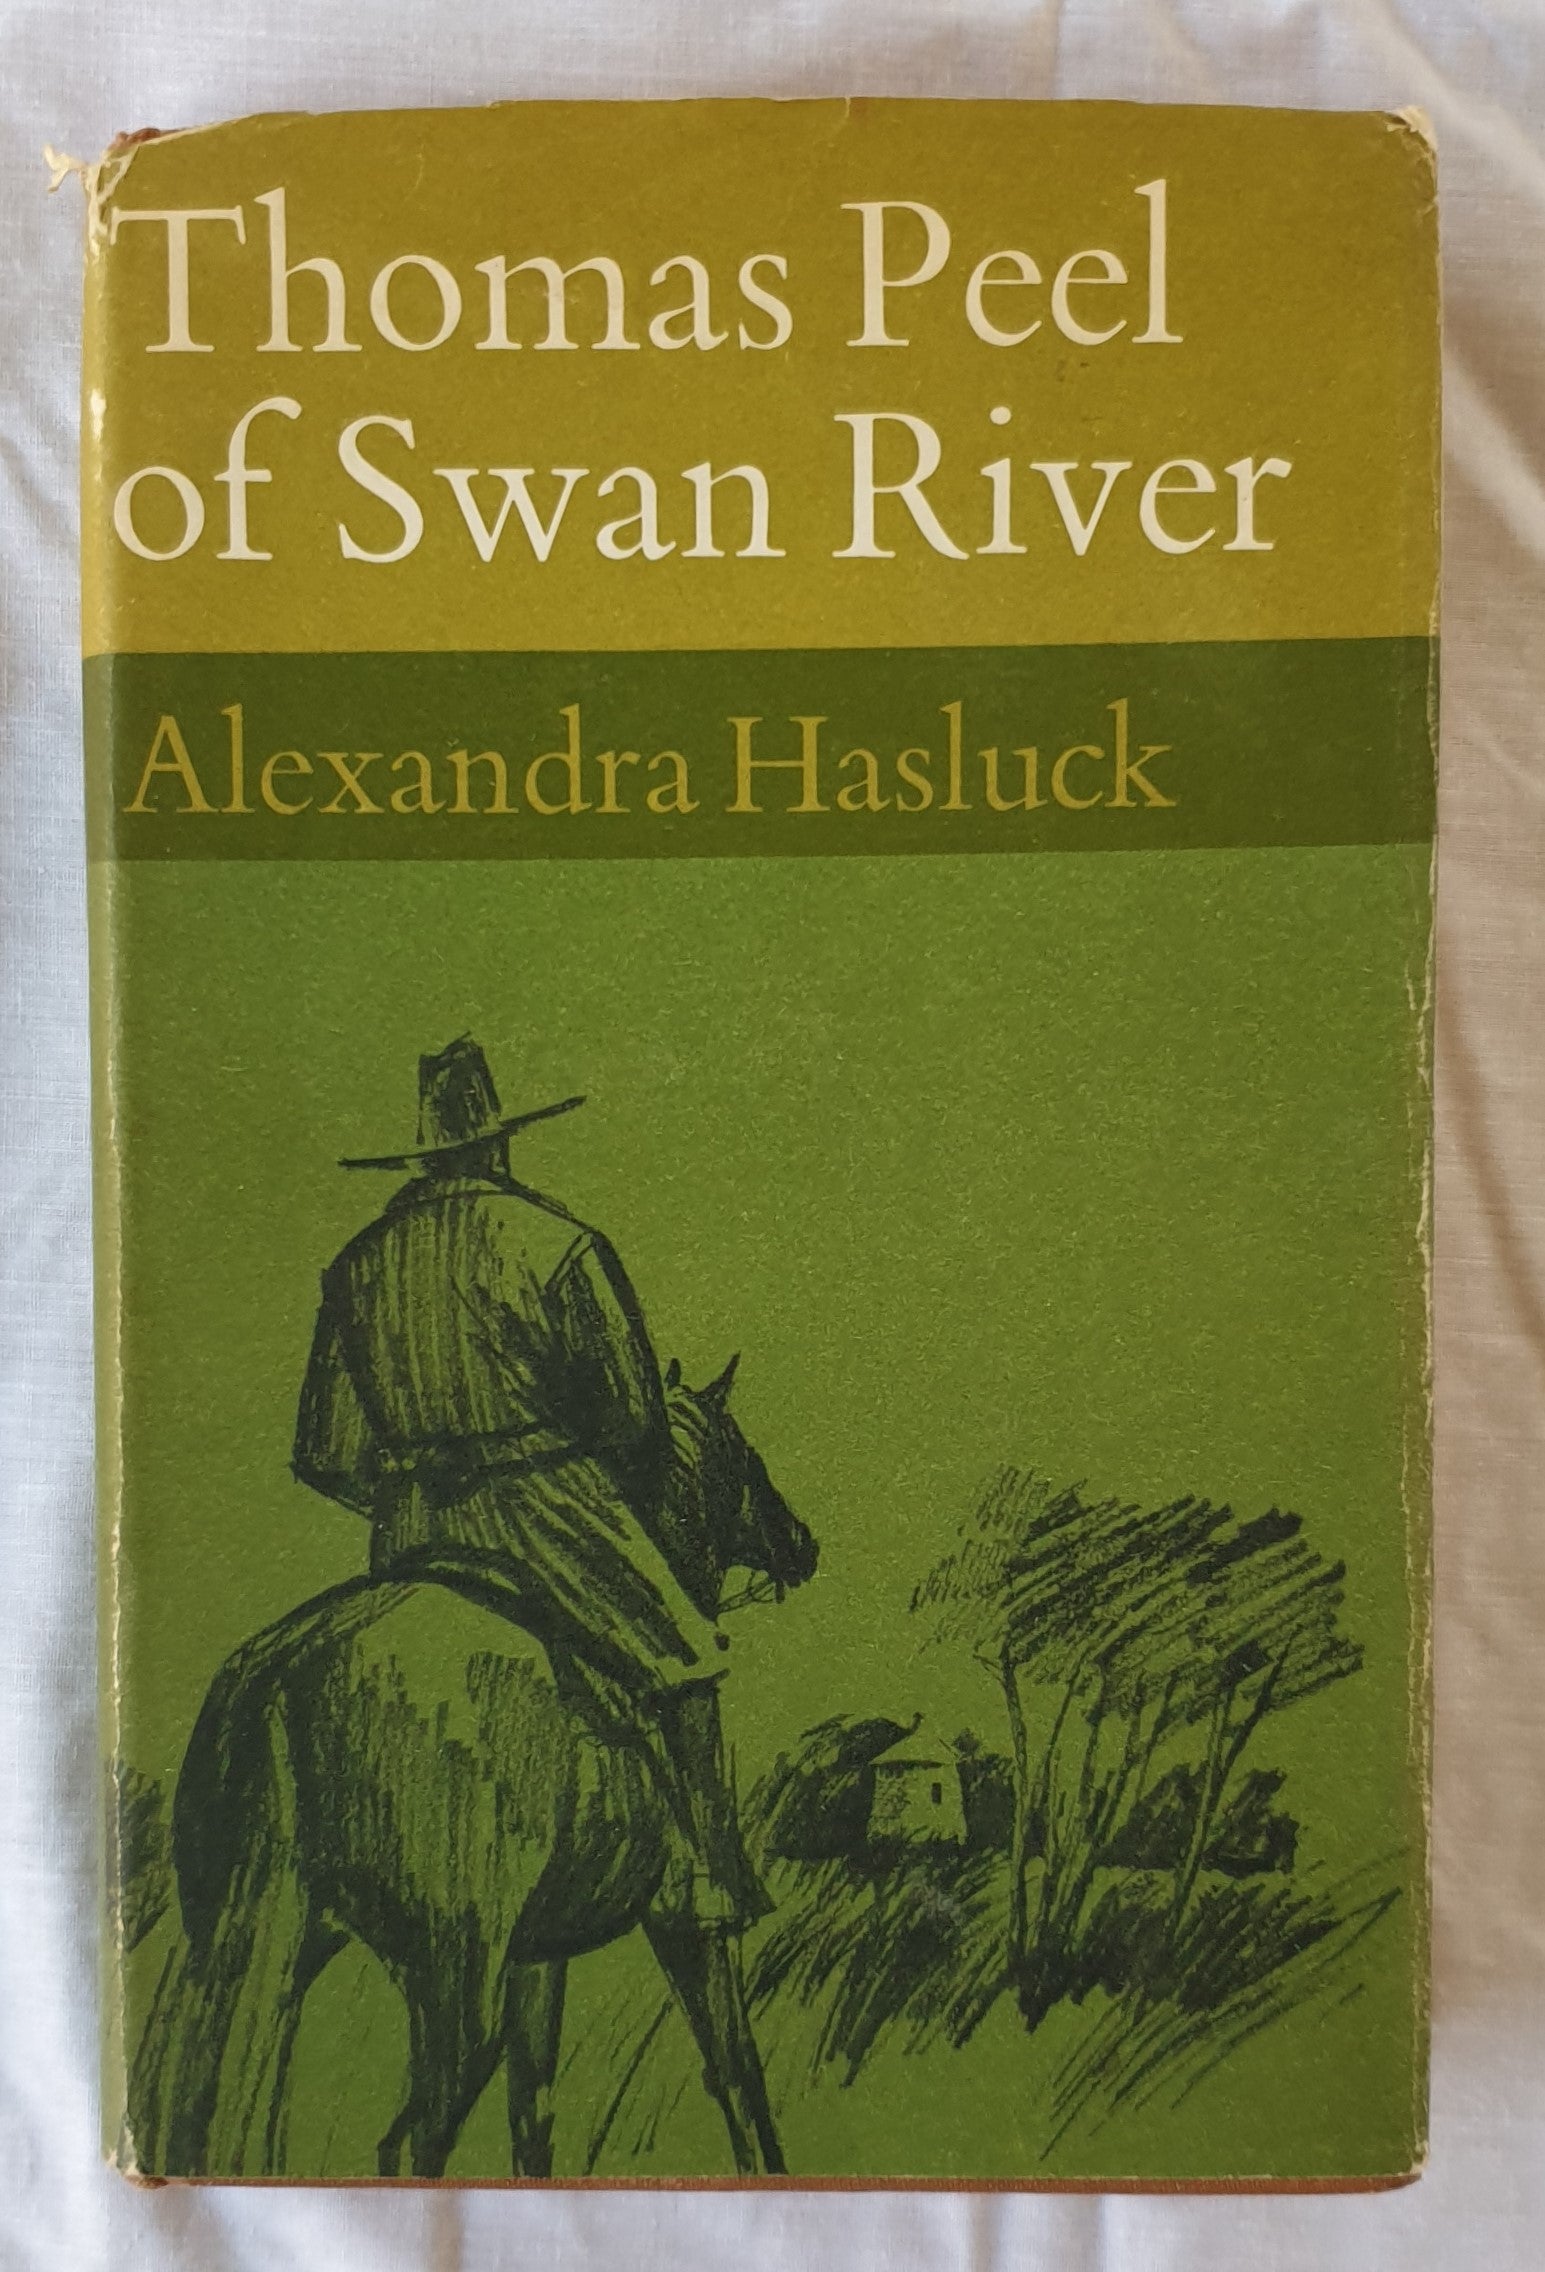 Thomas Peel of Swan River by Alexandra Hasluck